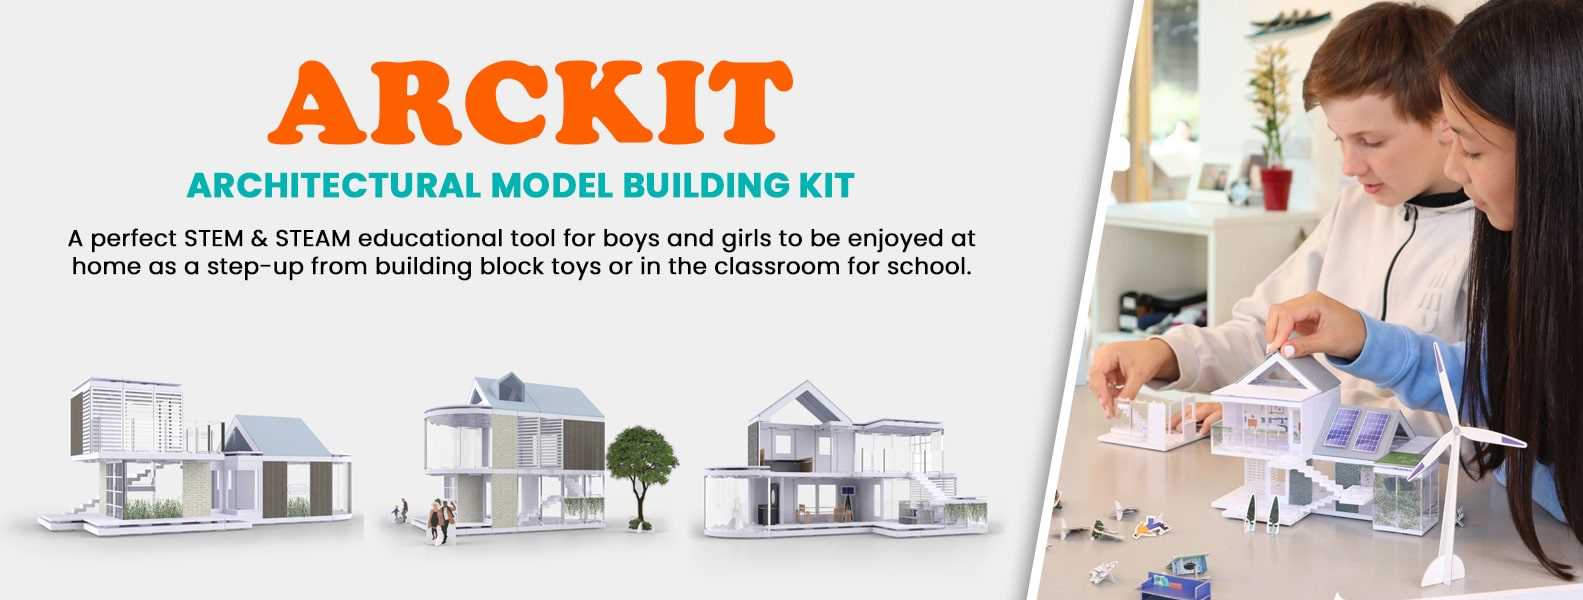 architectural_model_building_kit-mins